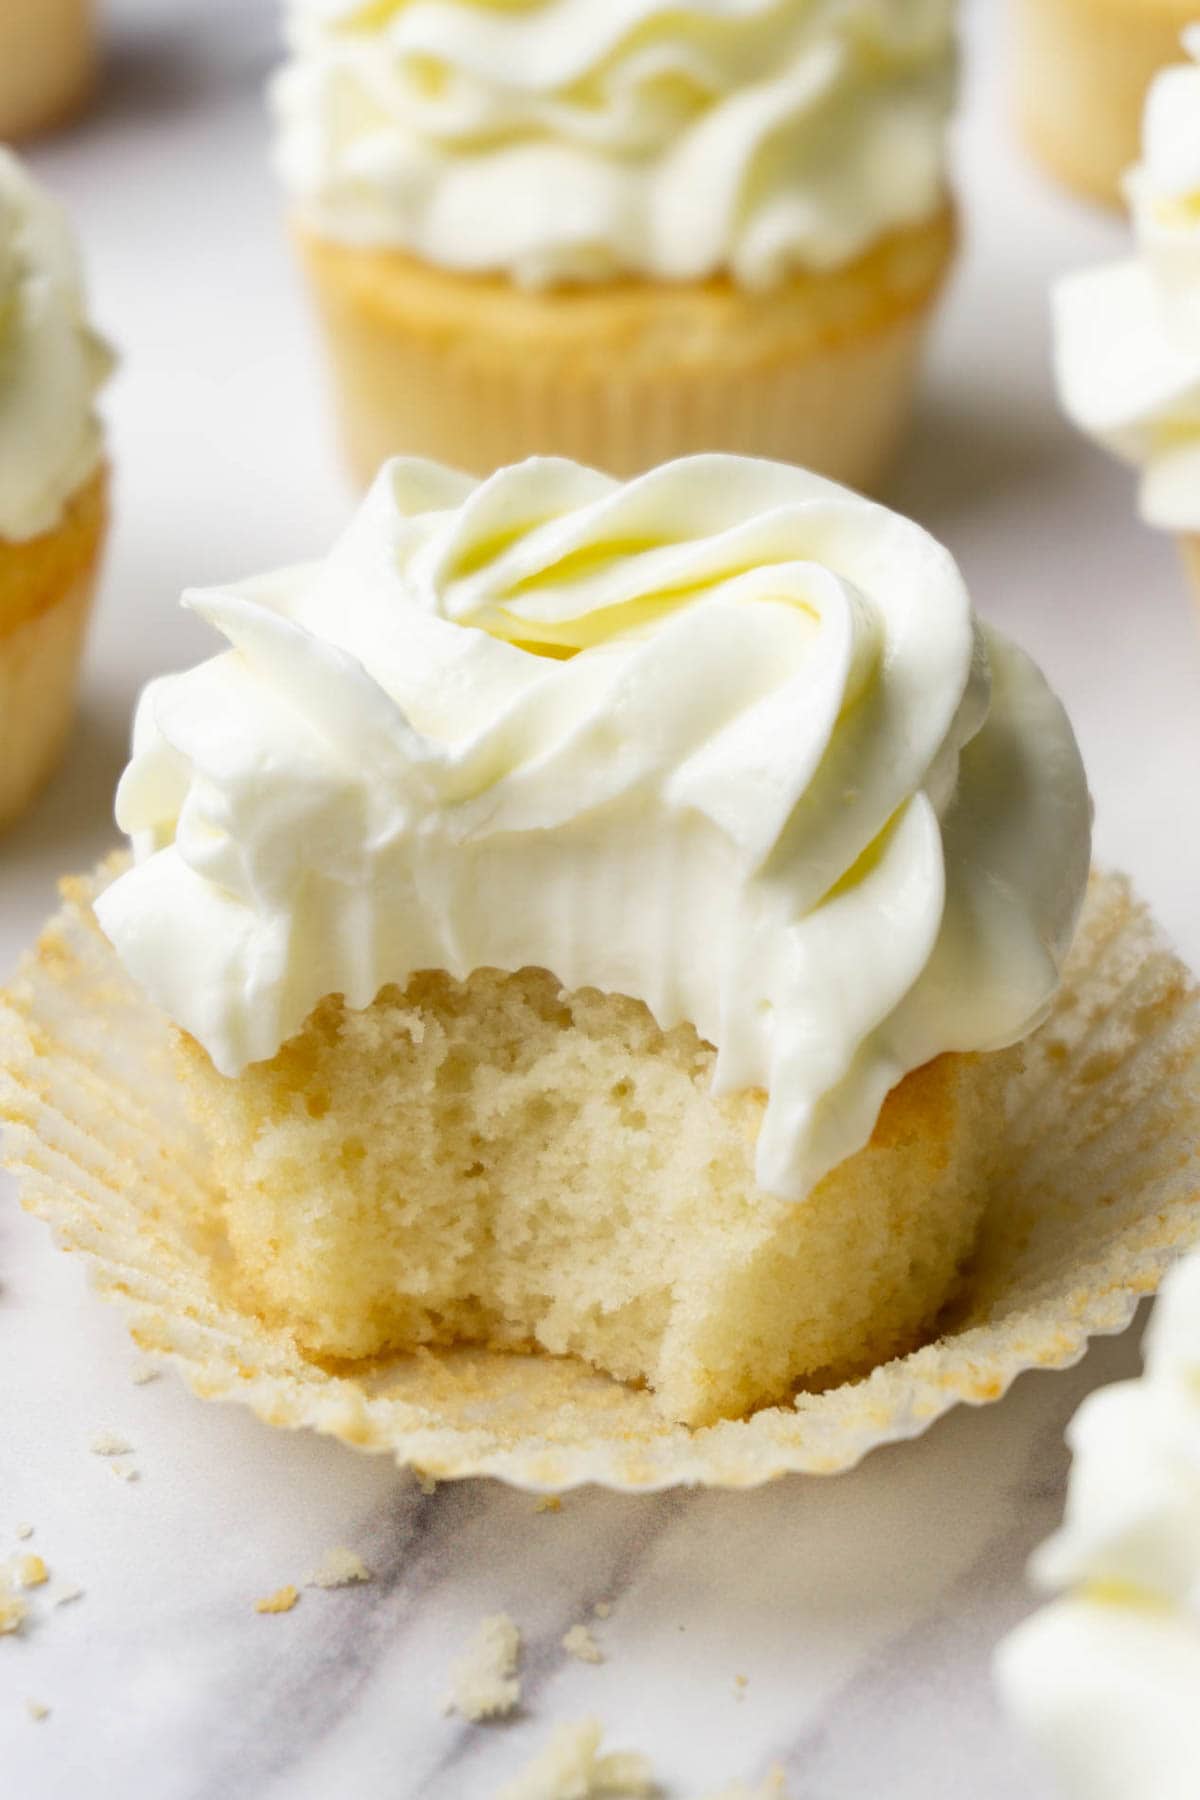 Vanilla cupcake with cream cheese frosting, one bite taken.